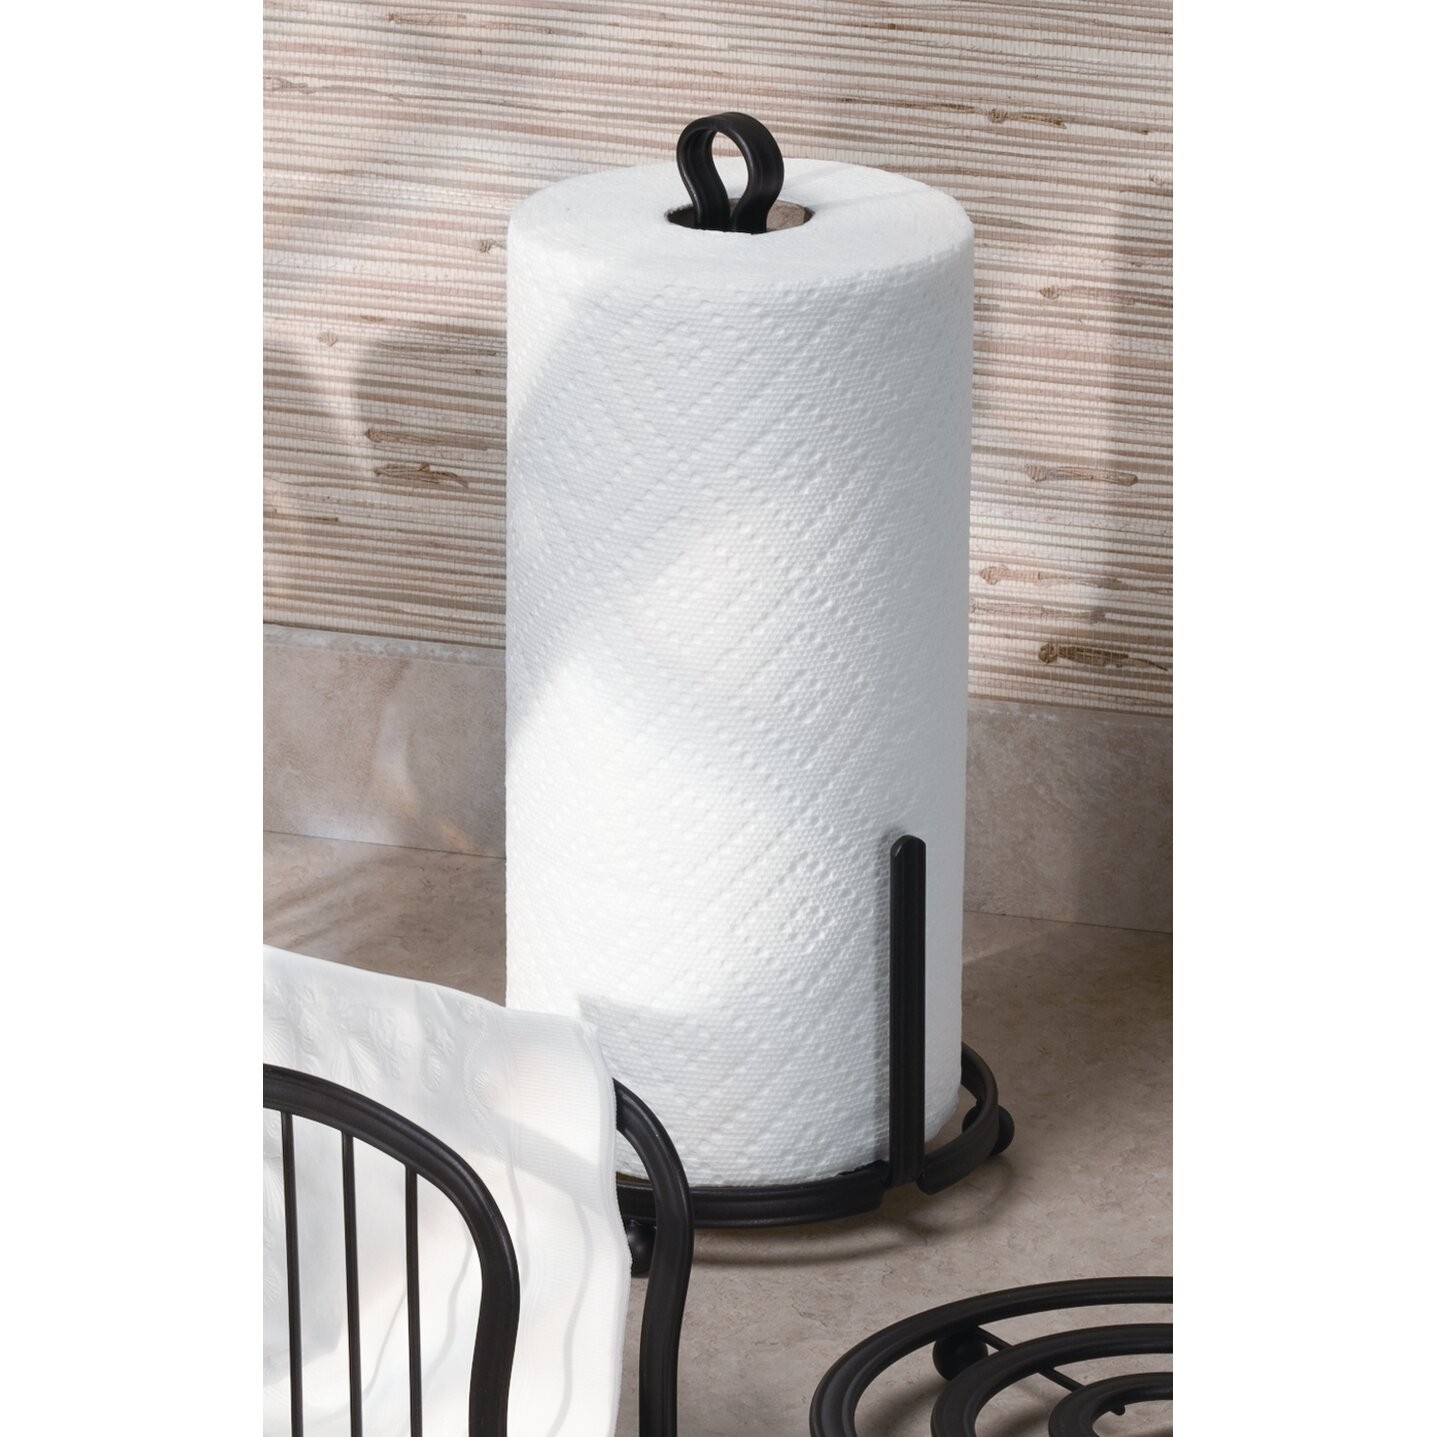 Nautical paper towel holder